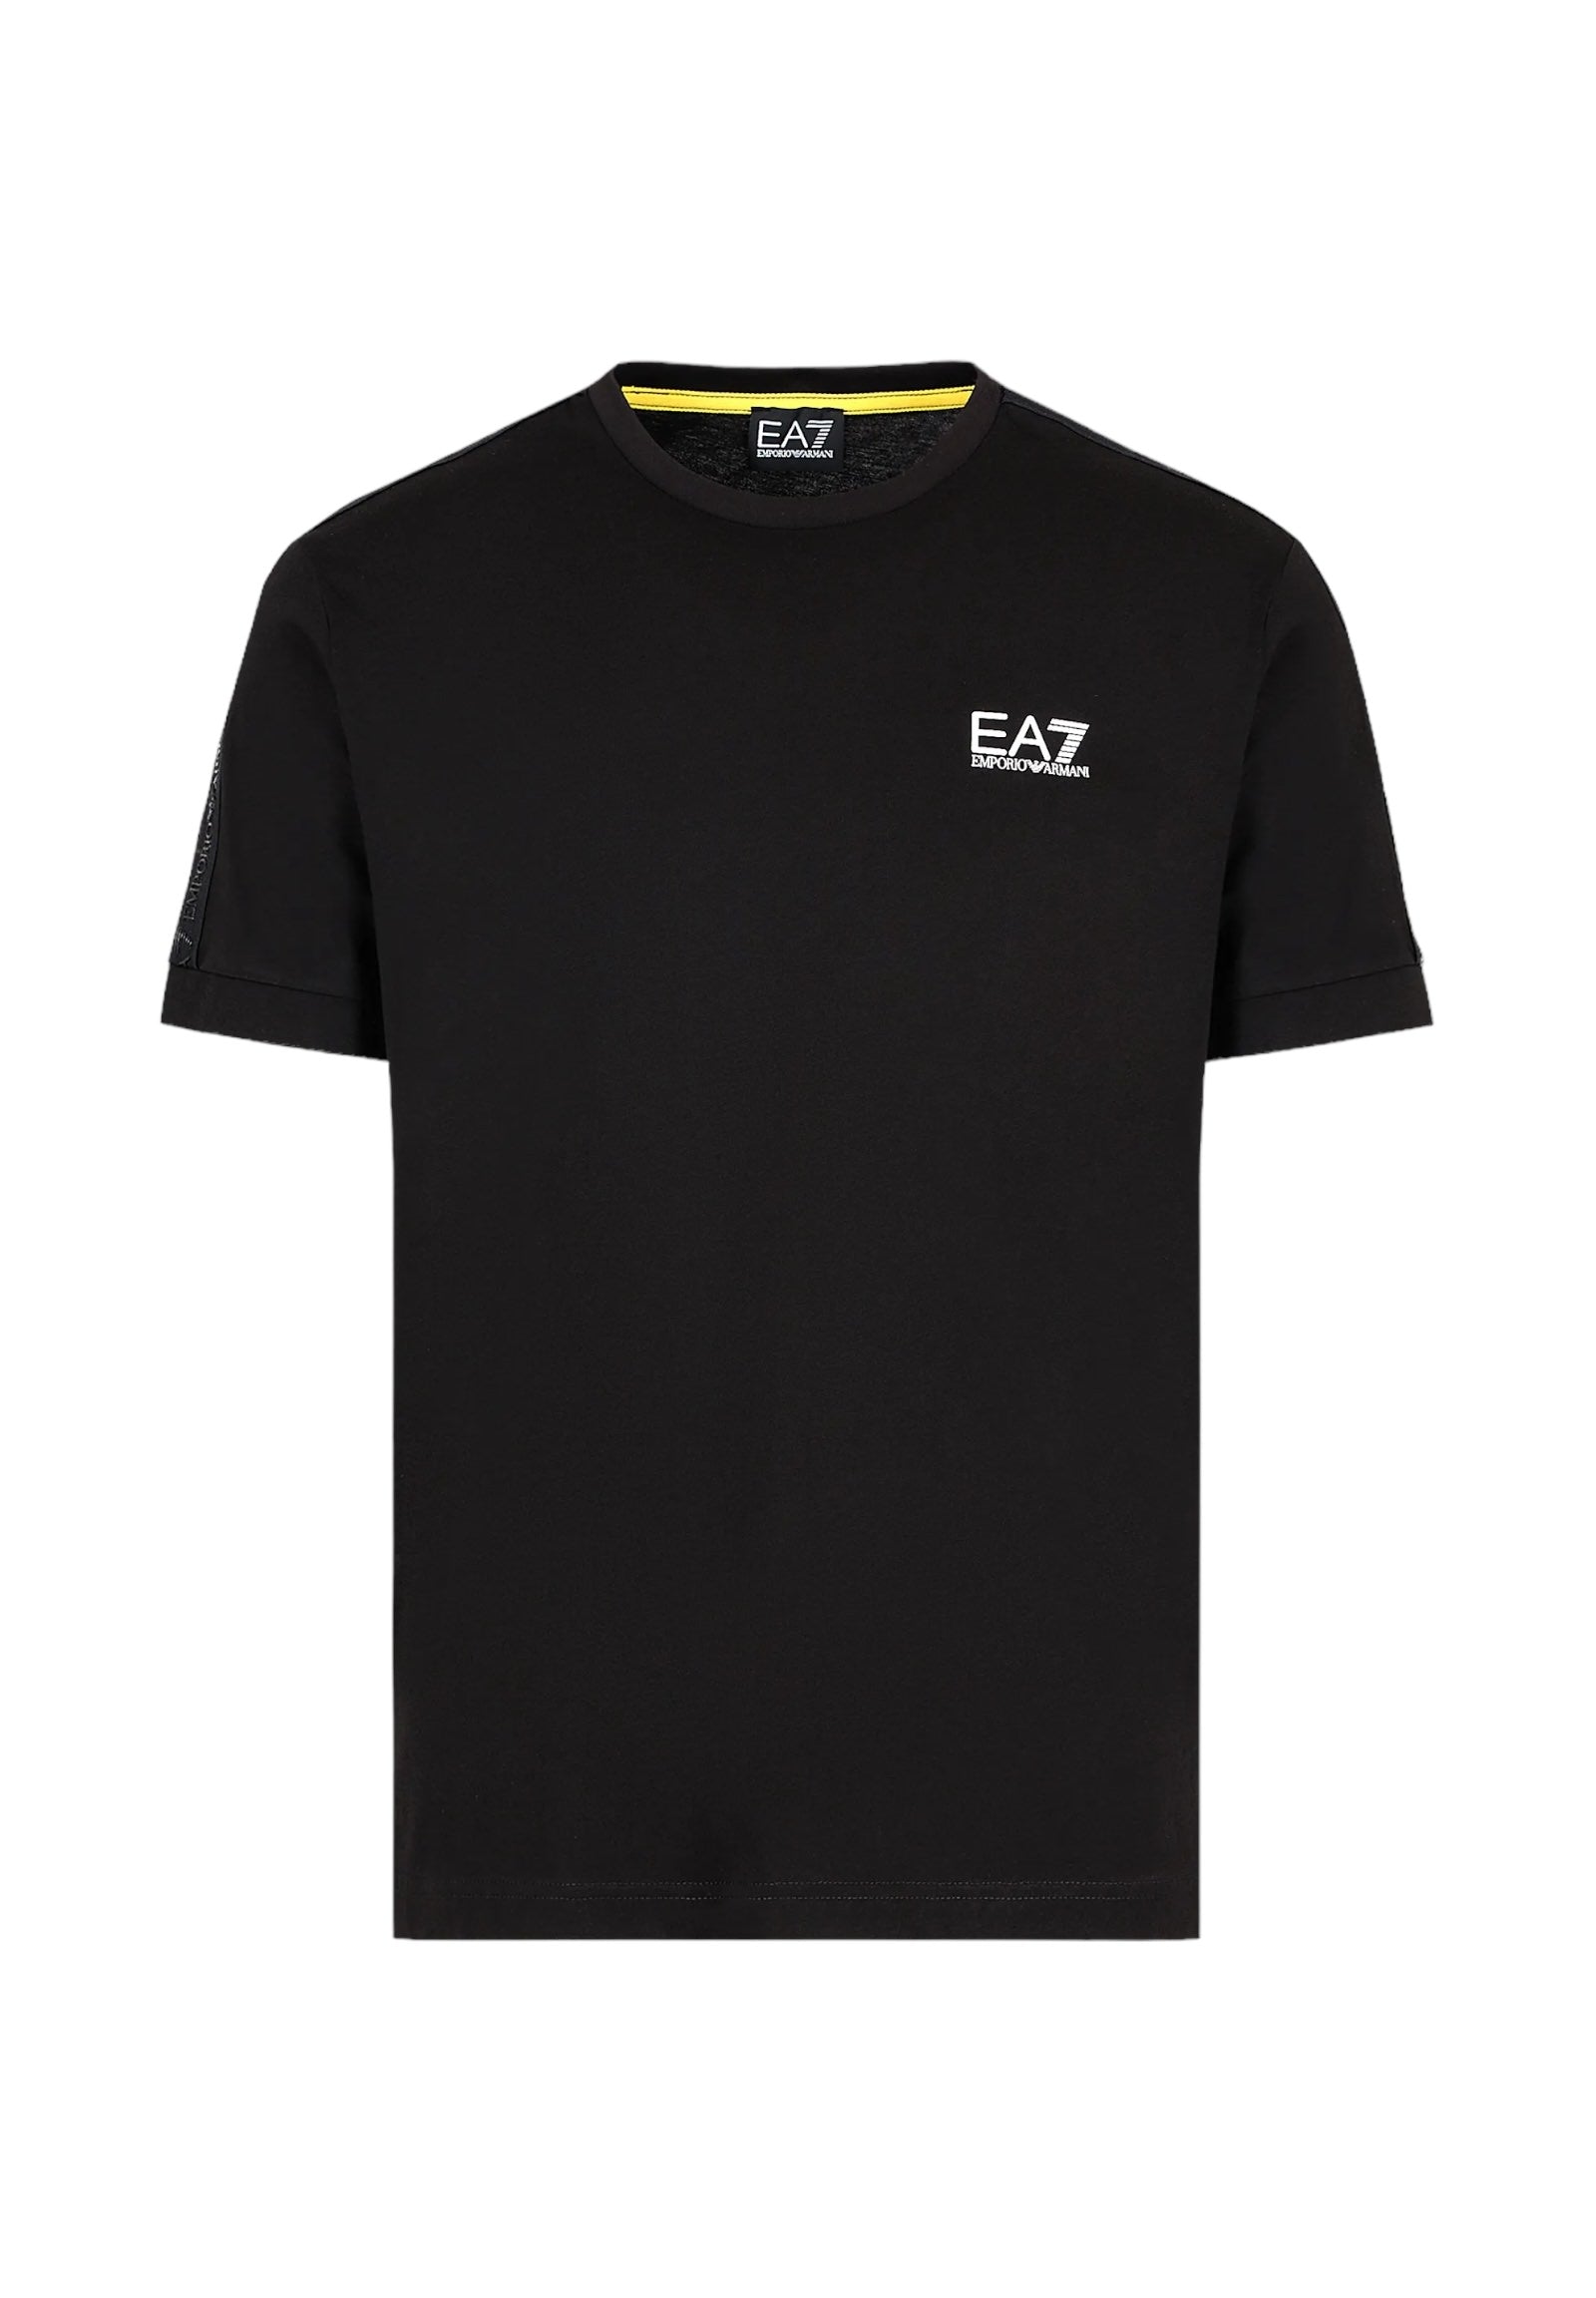 3dpt35 Black T-Shirt